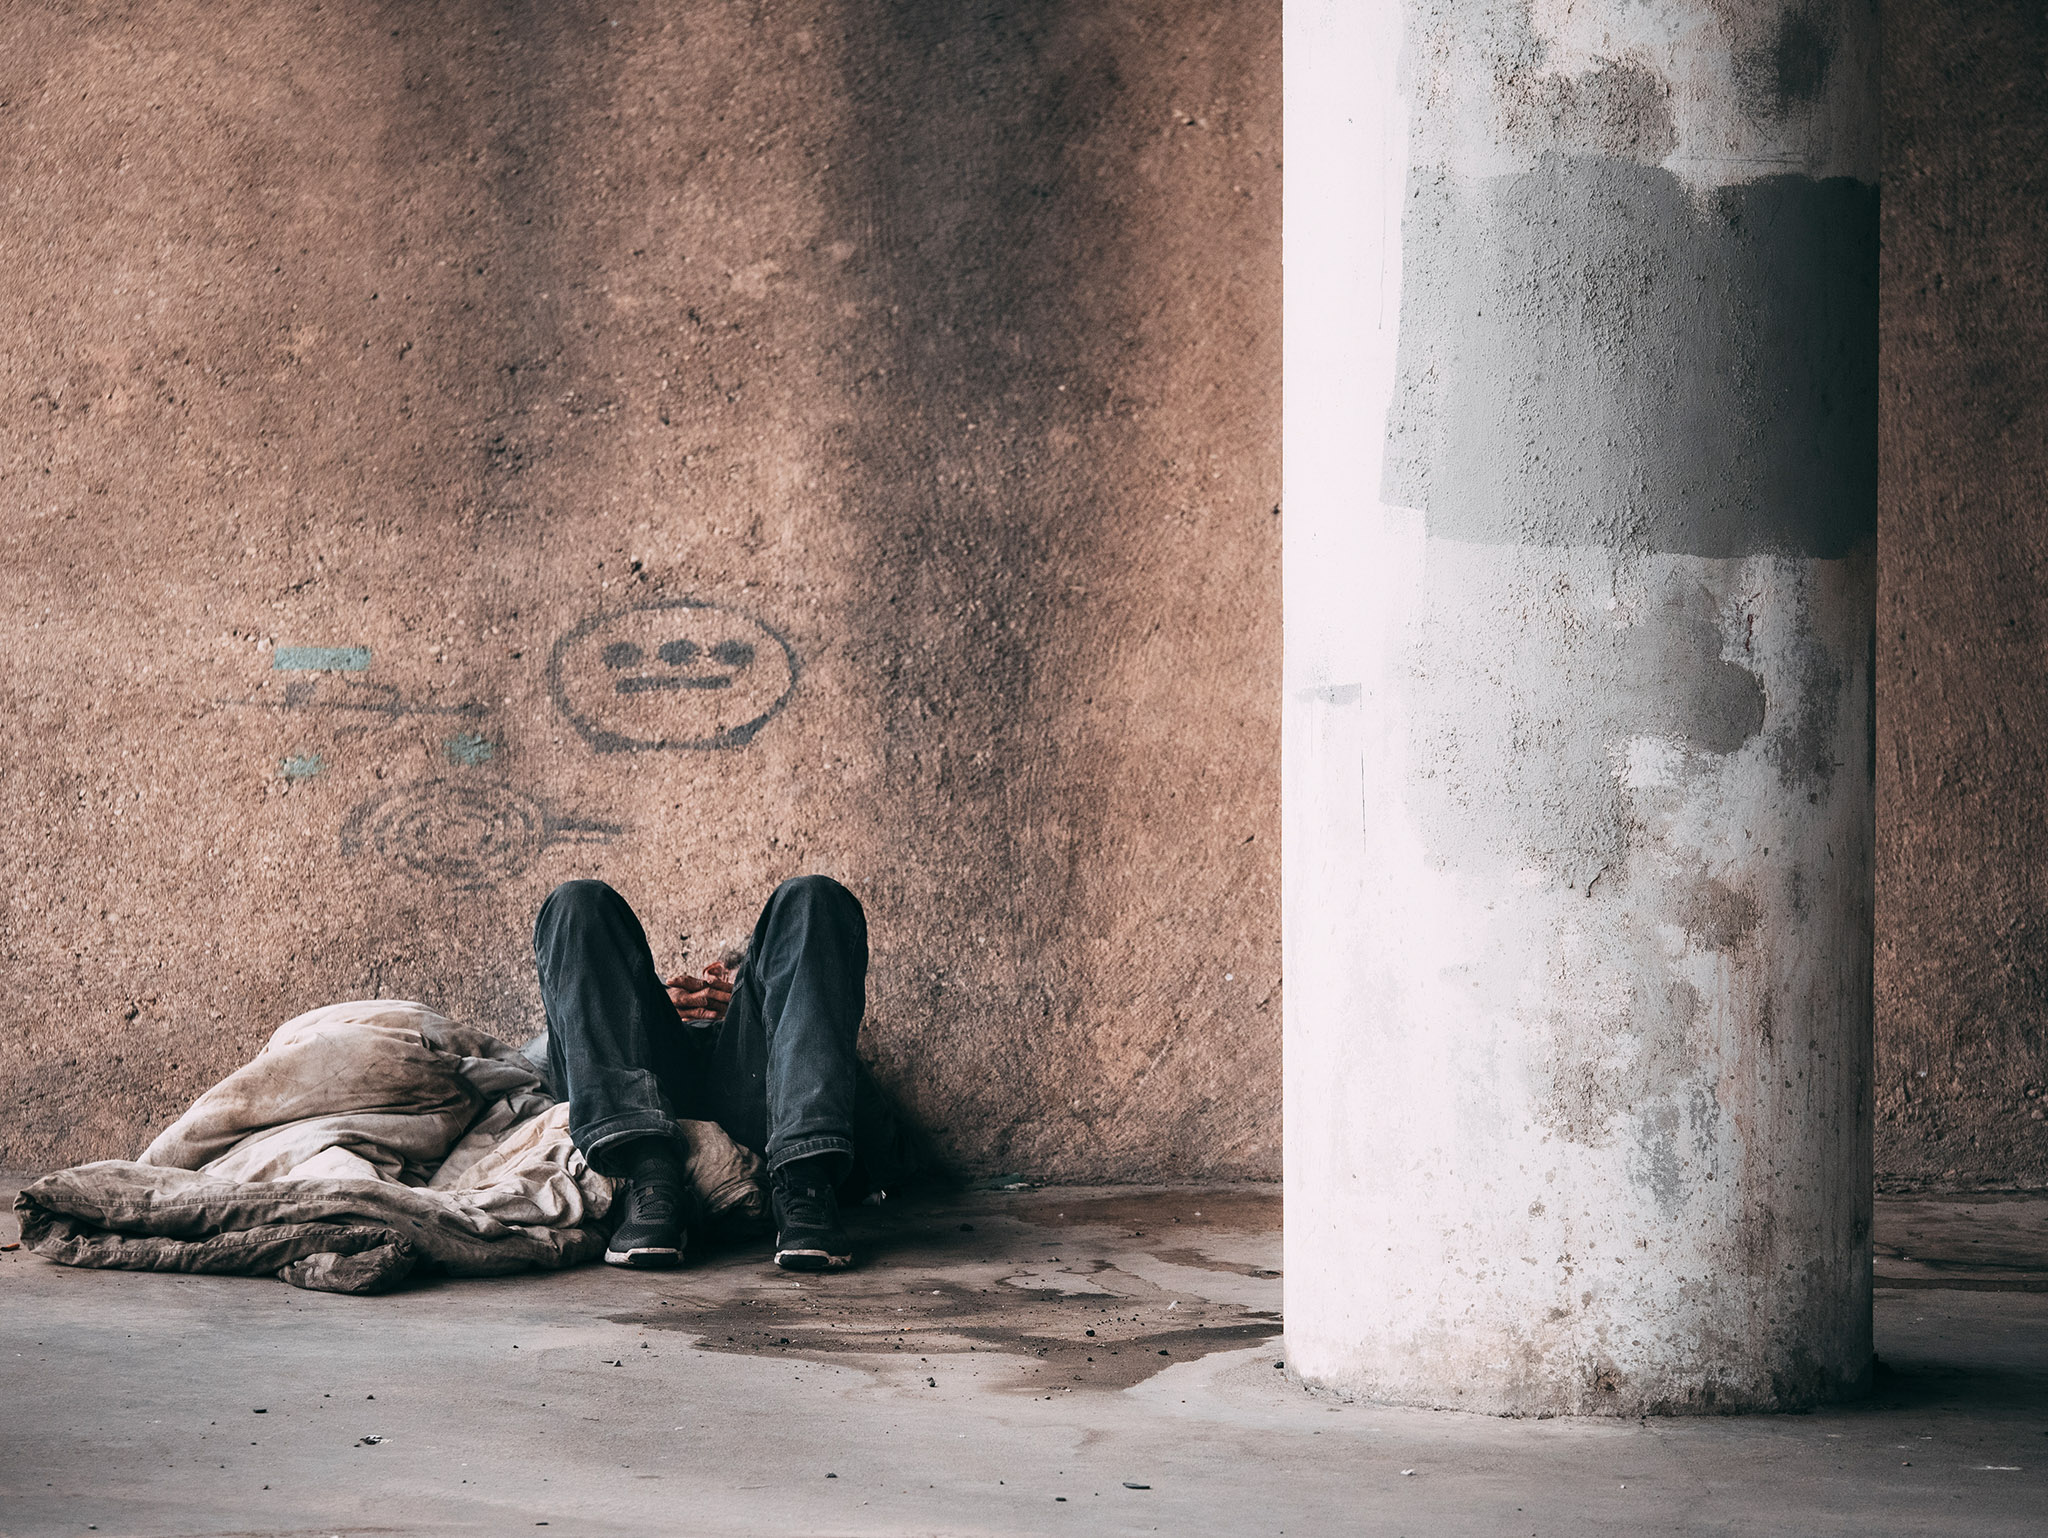 Street Photography - Homeless man